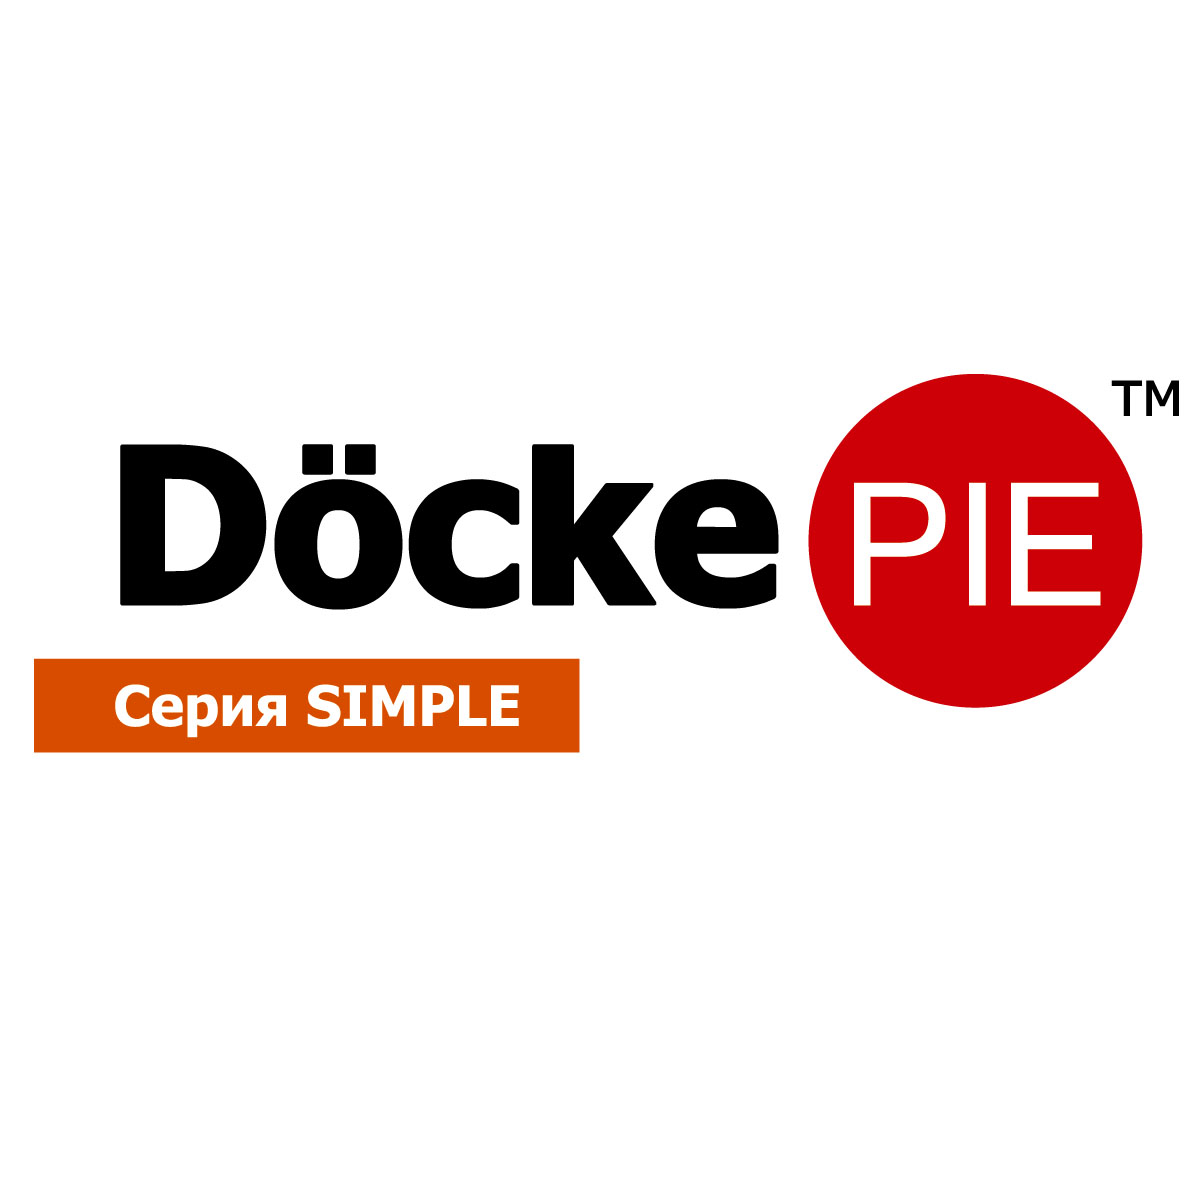 Döcke Pie Simple